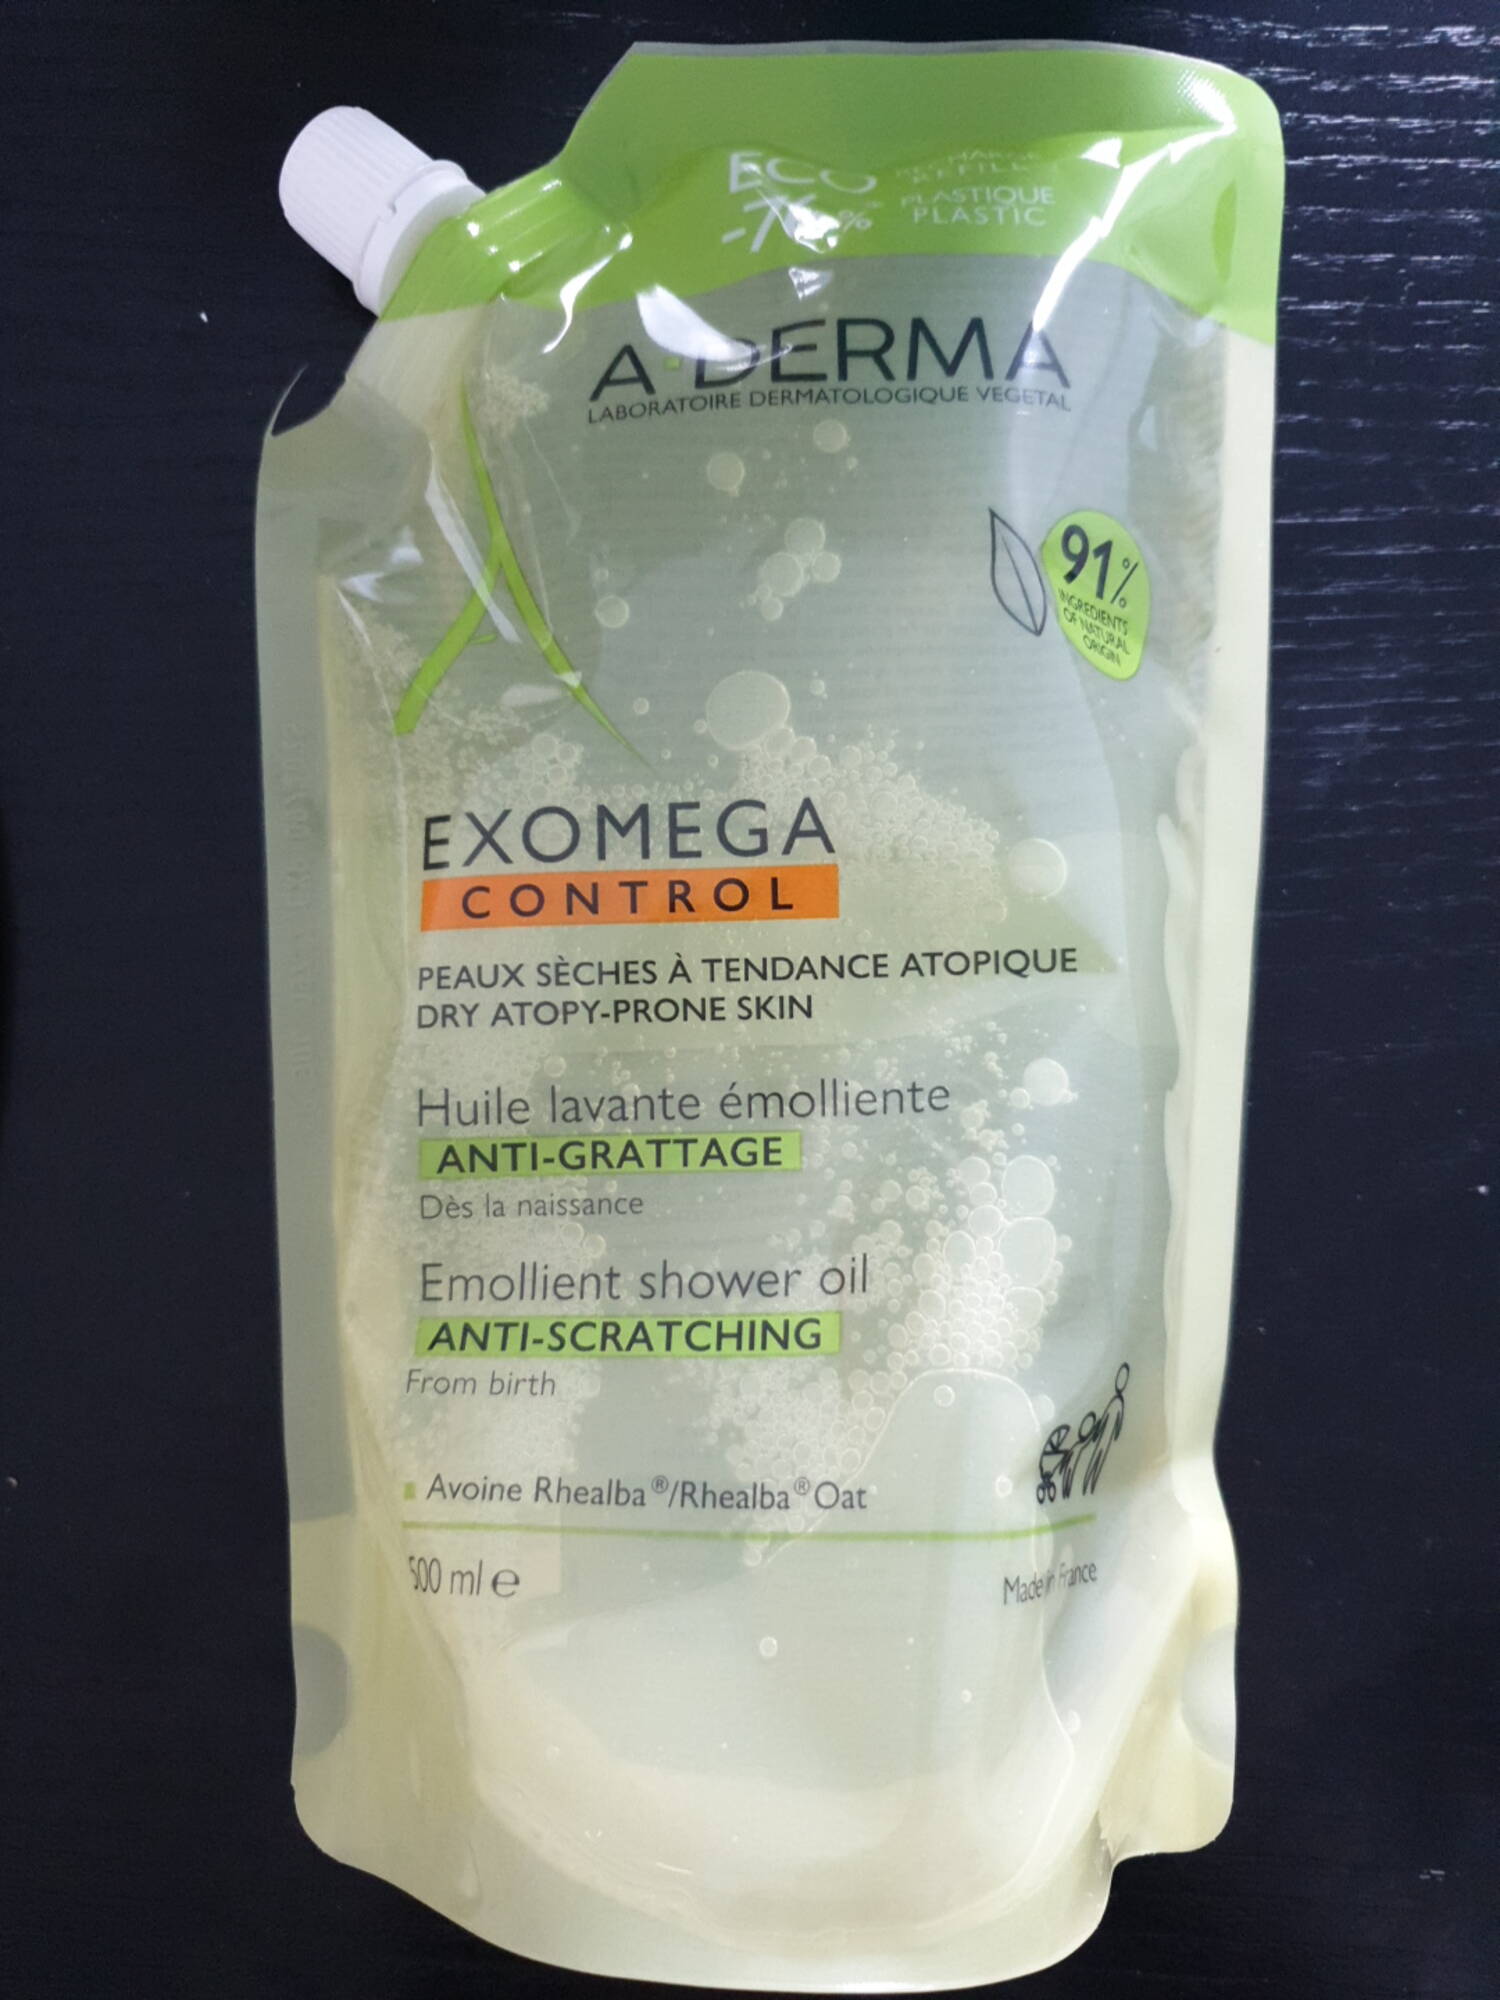 A-DERMA - Exogema control - Huile lavante émolliente anti-grattage